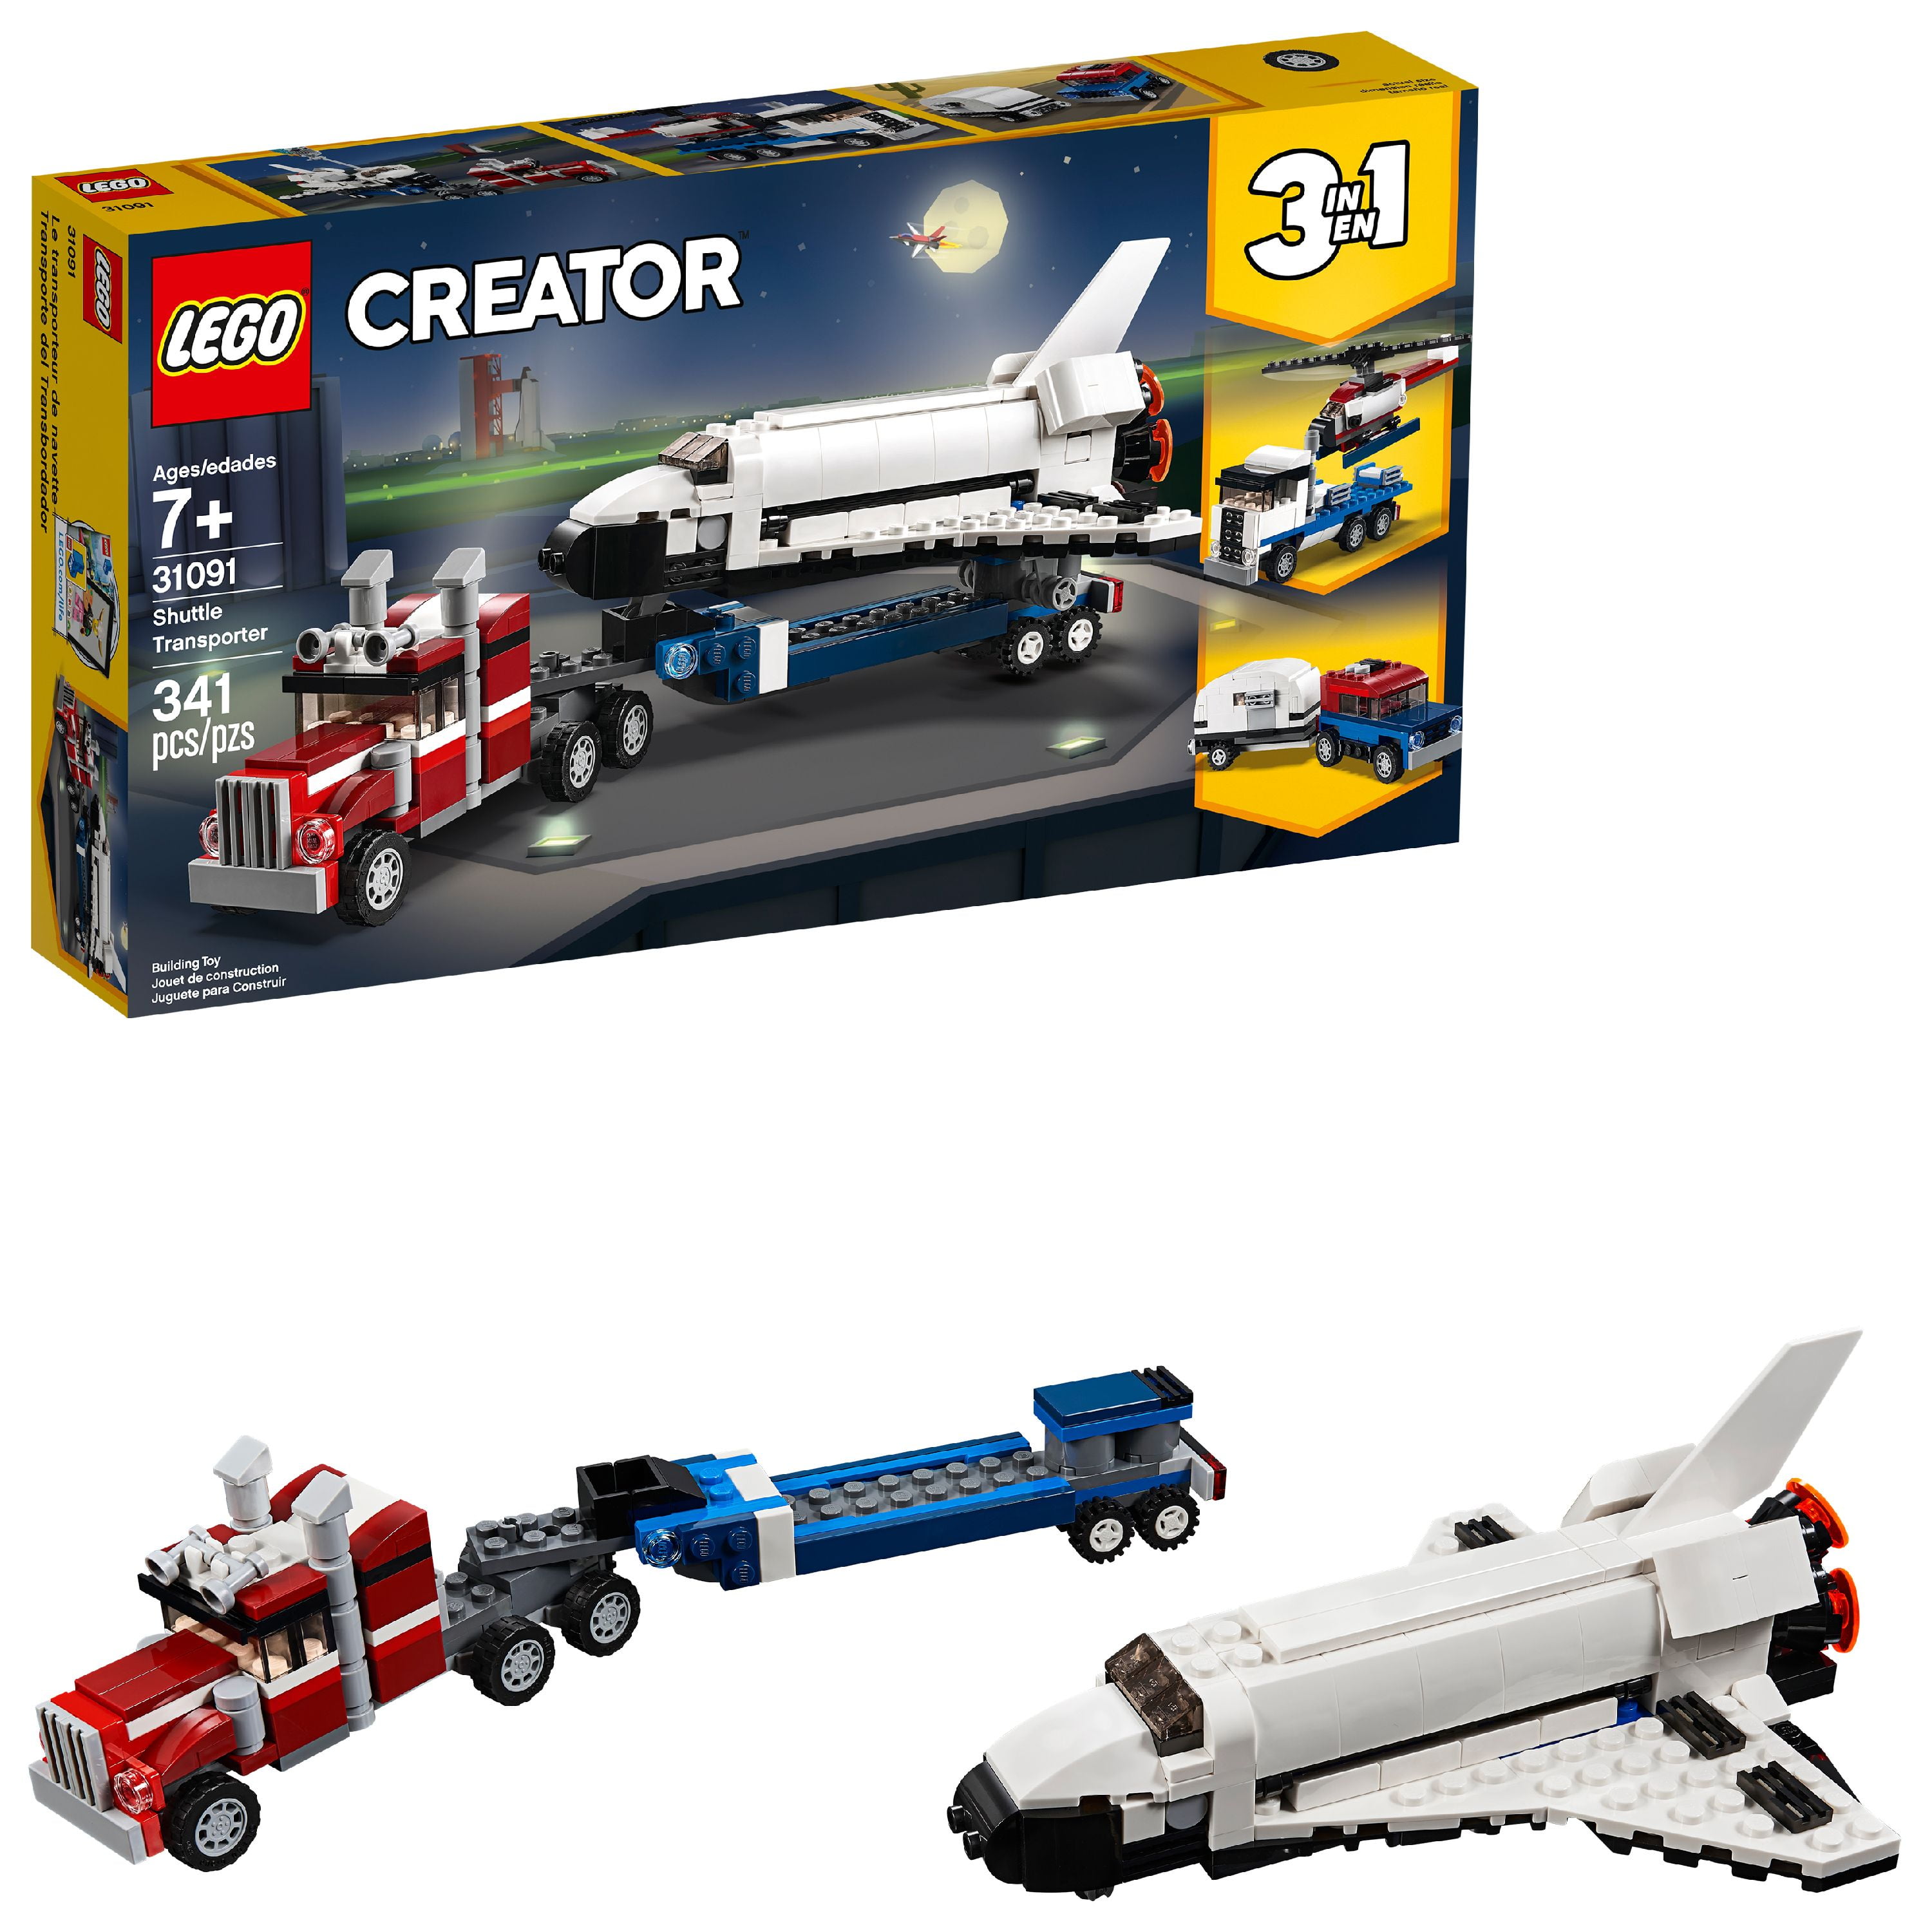 LEGO Creator Space Shuttle Transporter Building 31091 - Walmart.com